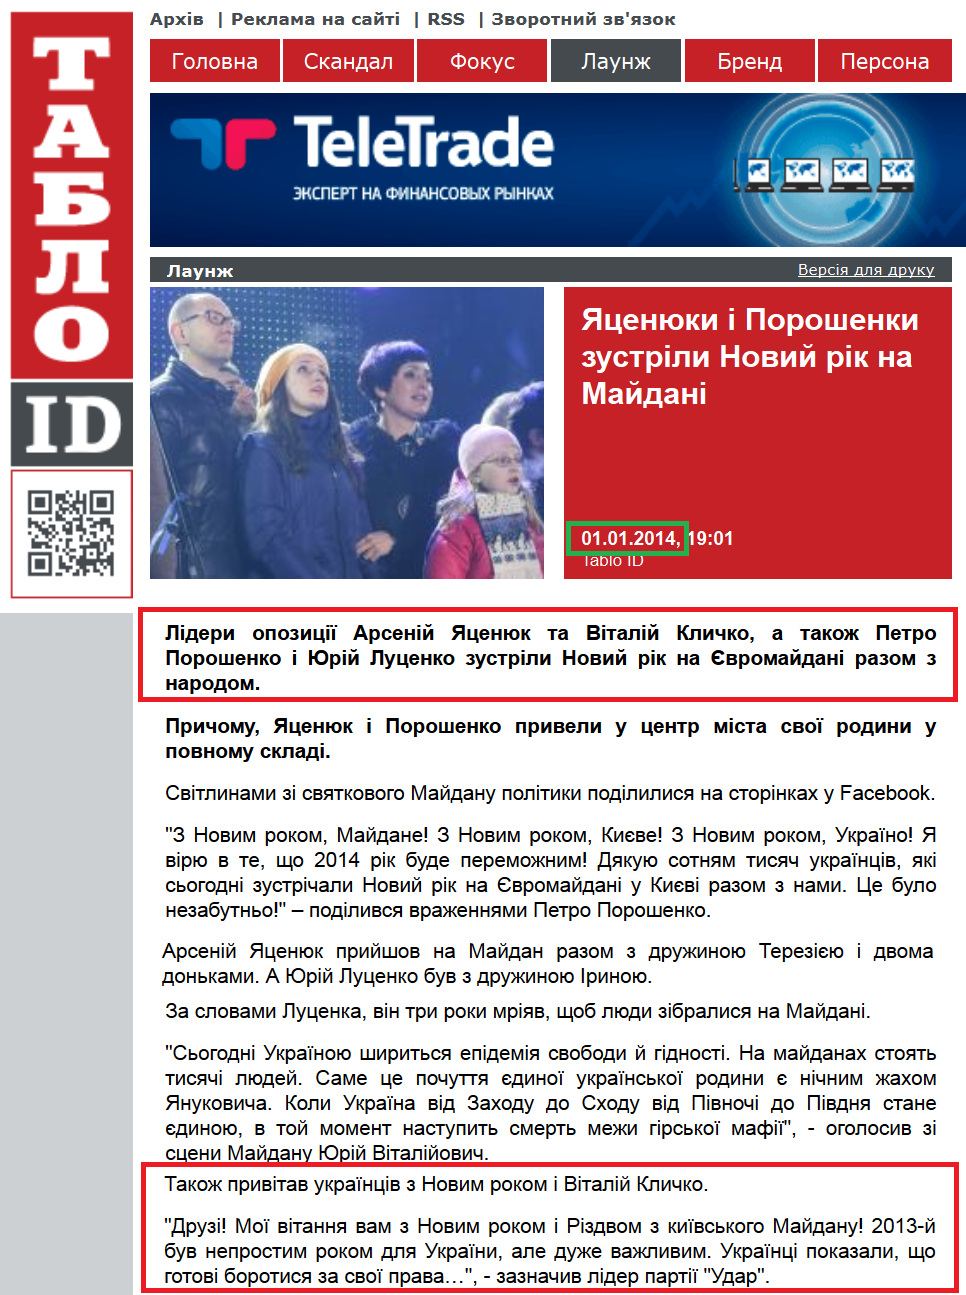 http://tabloid.pravda.com.ua/lounge/52c449ea211b6/